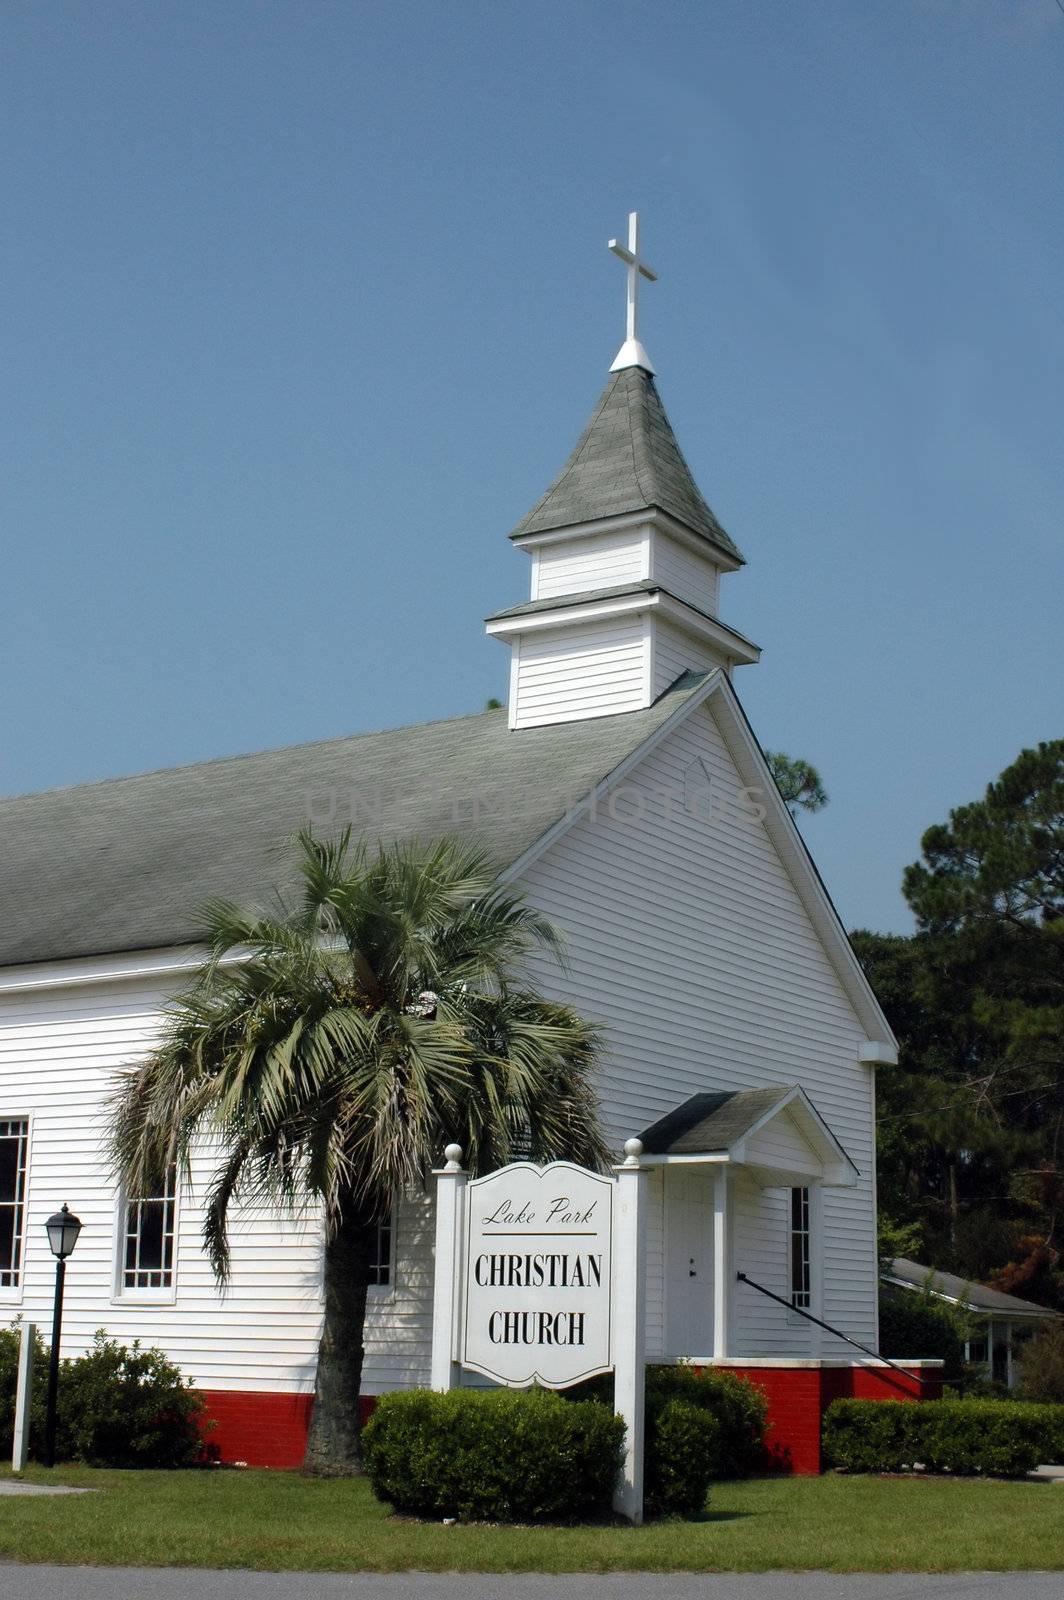 Christian Church by suwanneeredhead